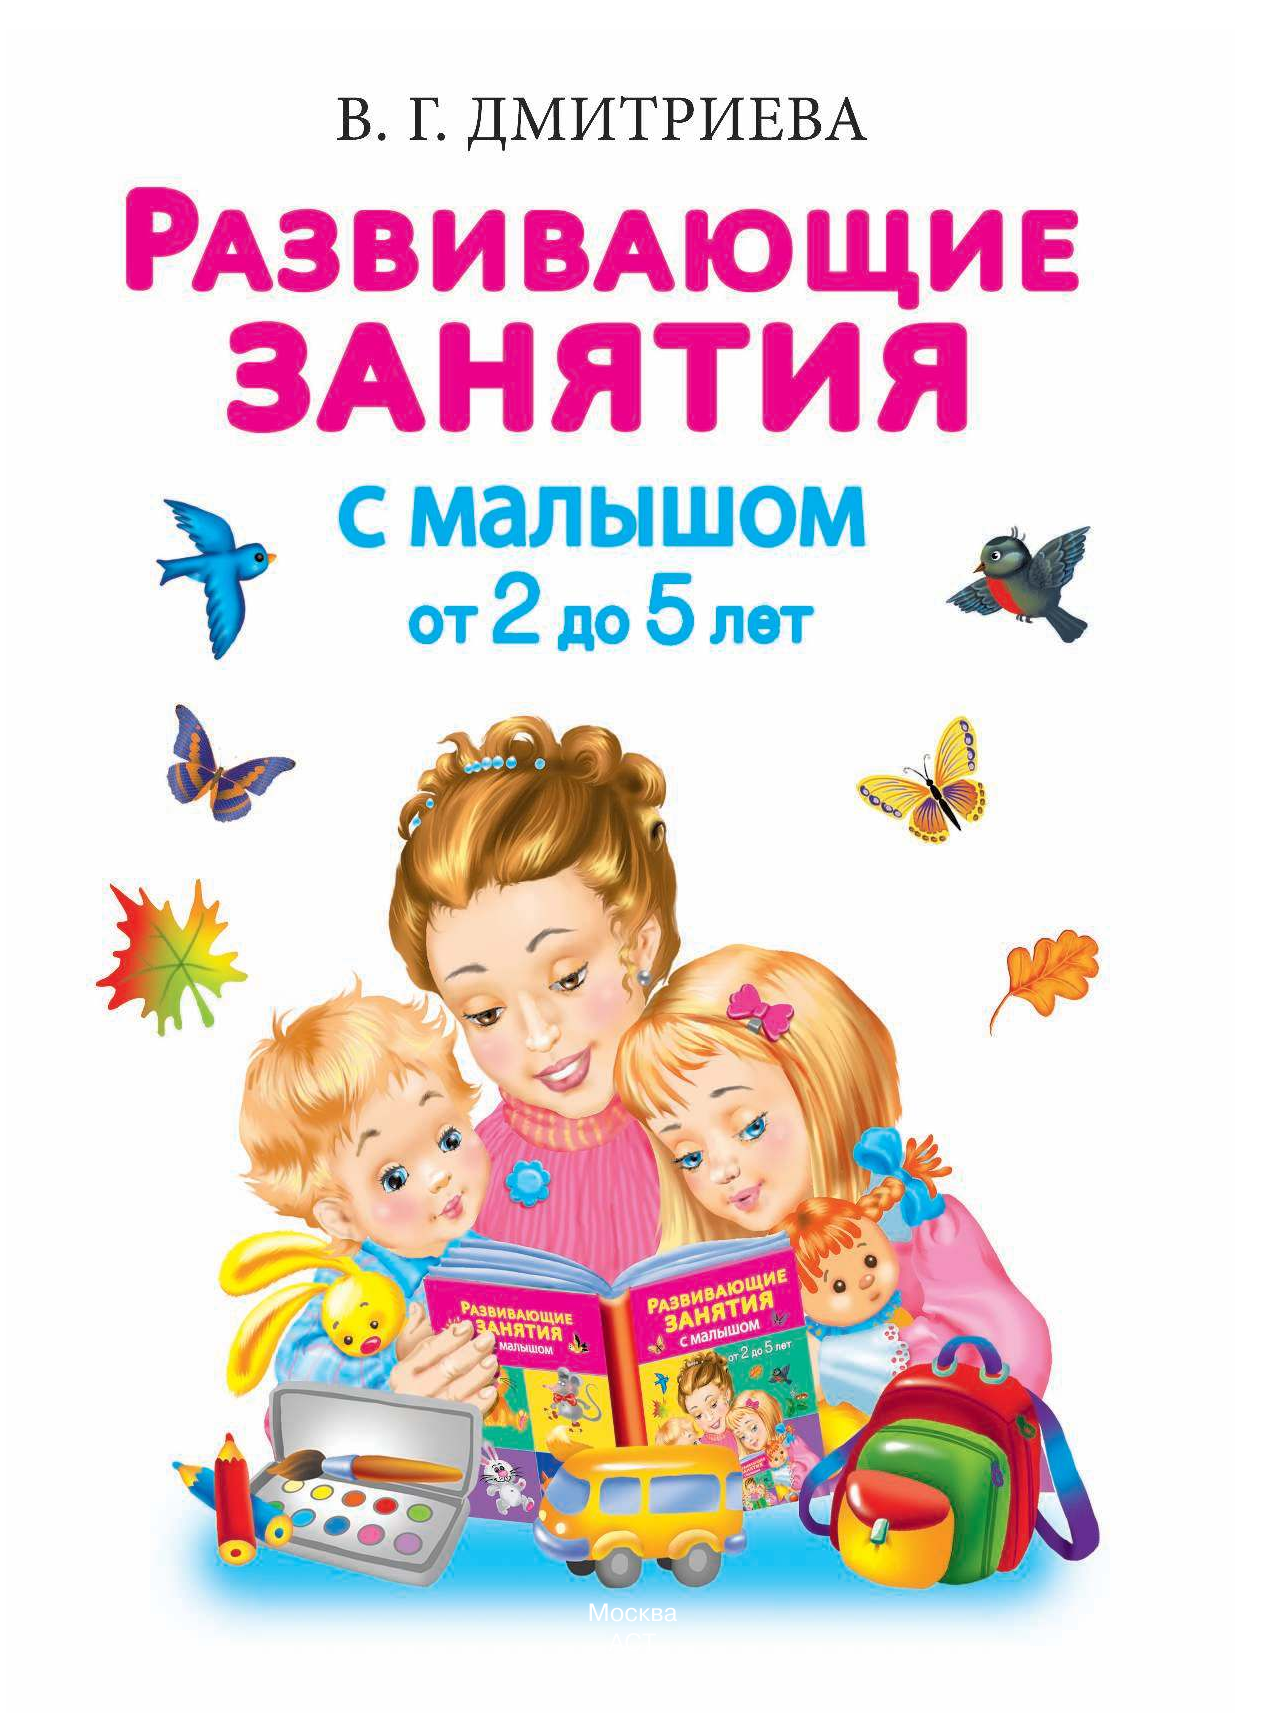 Дмитриева Валентина Геннадьевна Развивающие занятия с малышом от 2 до 5 лет - страница 2